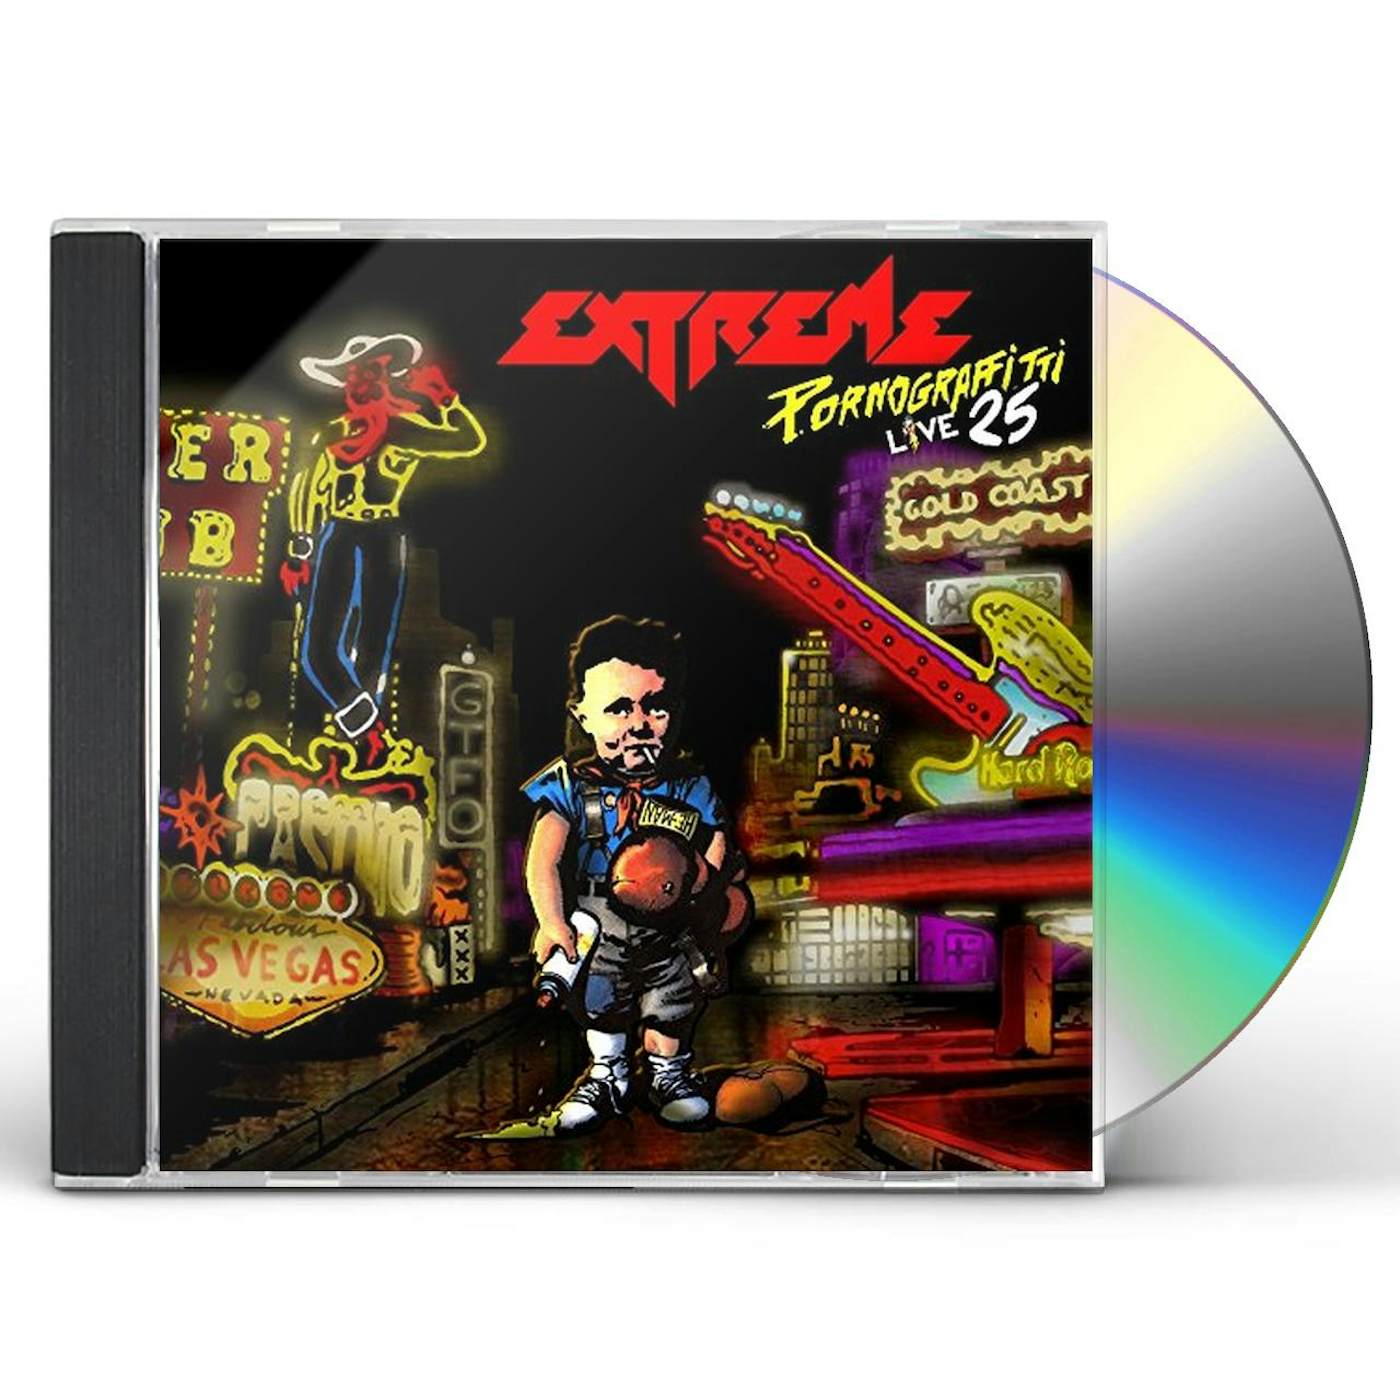 Extreme PORNOGRAFFITTI LIVE 25 CD